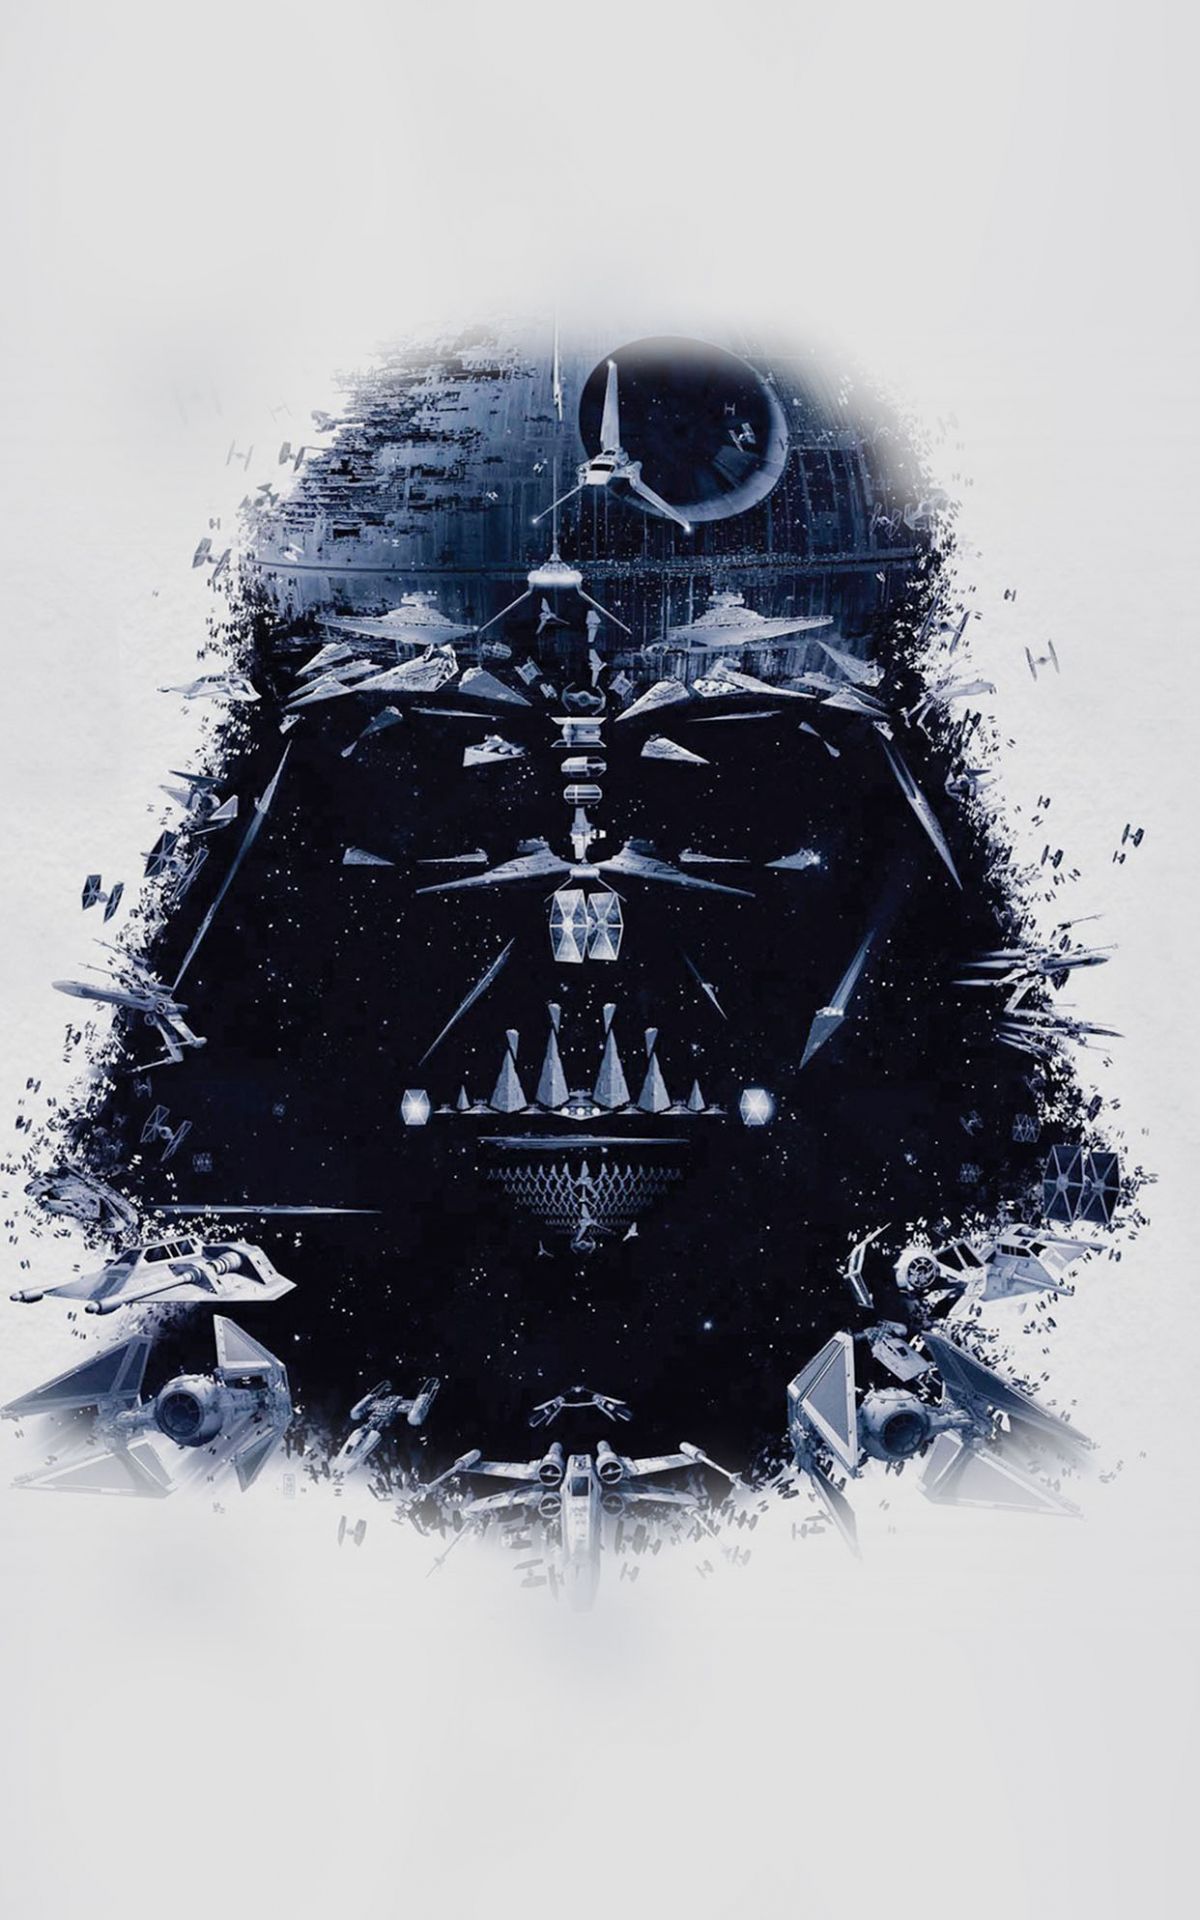 Darth Vader Phone Wallpapers